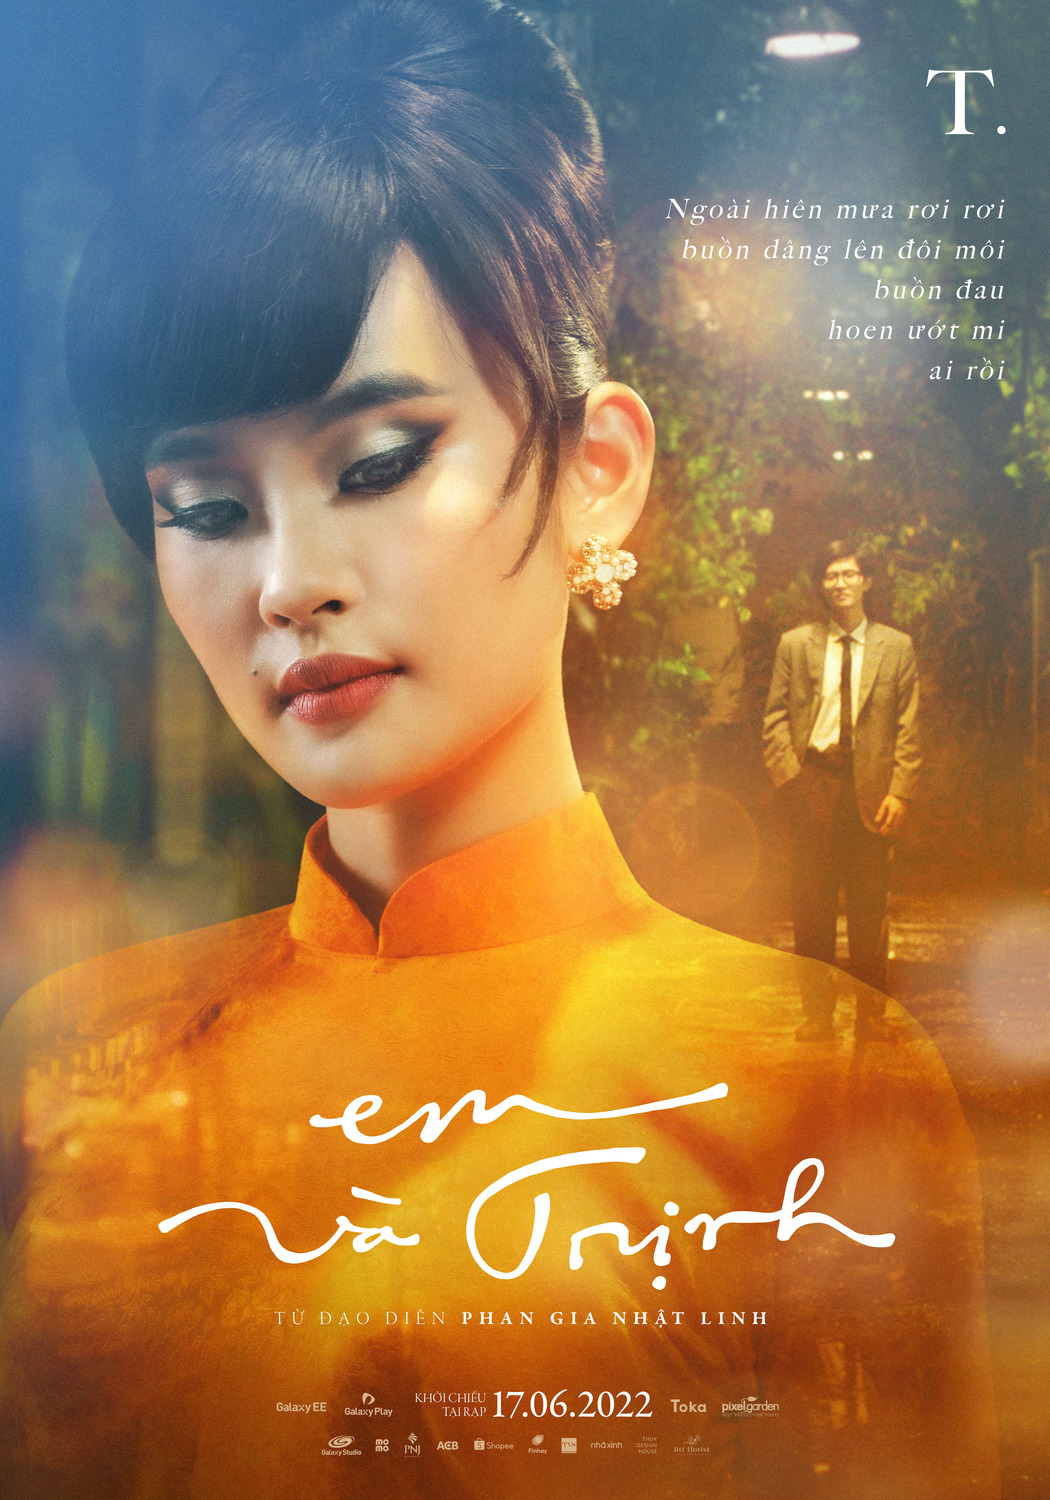 Extra Large Movie Poster Image for Em Va Trinh (#18 of 19)